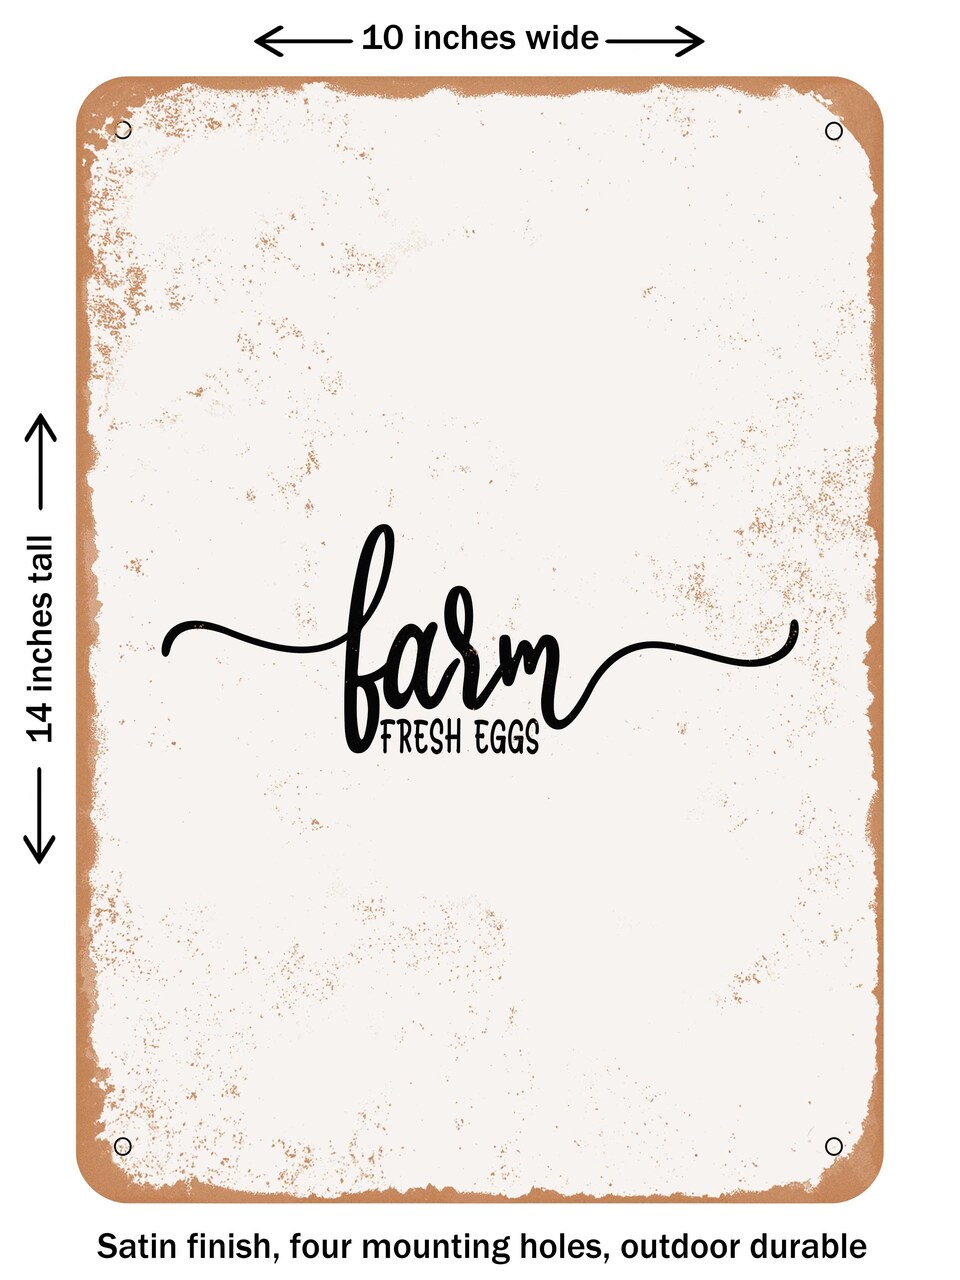 DECORATIVE METAL SIGN - Farm Fresh Eggs - 5 - Vintage Rusty Look